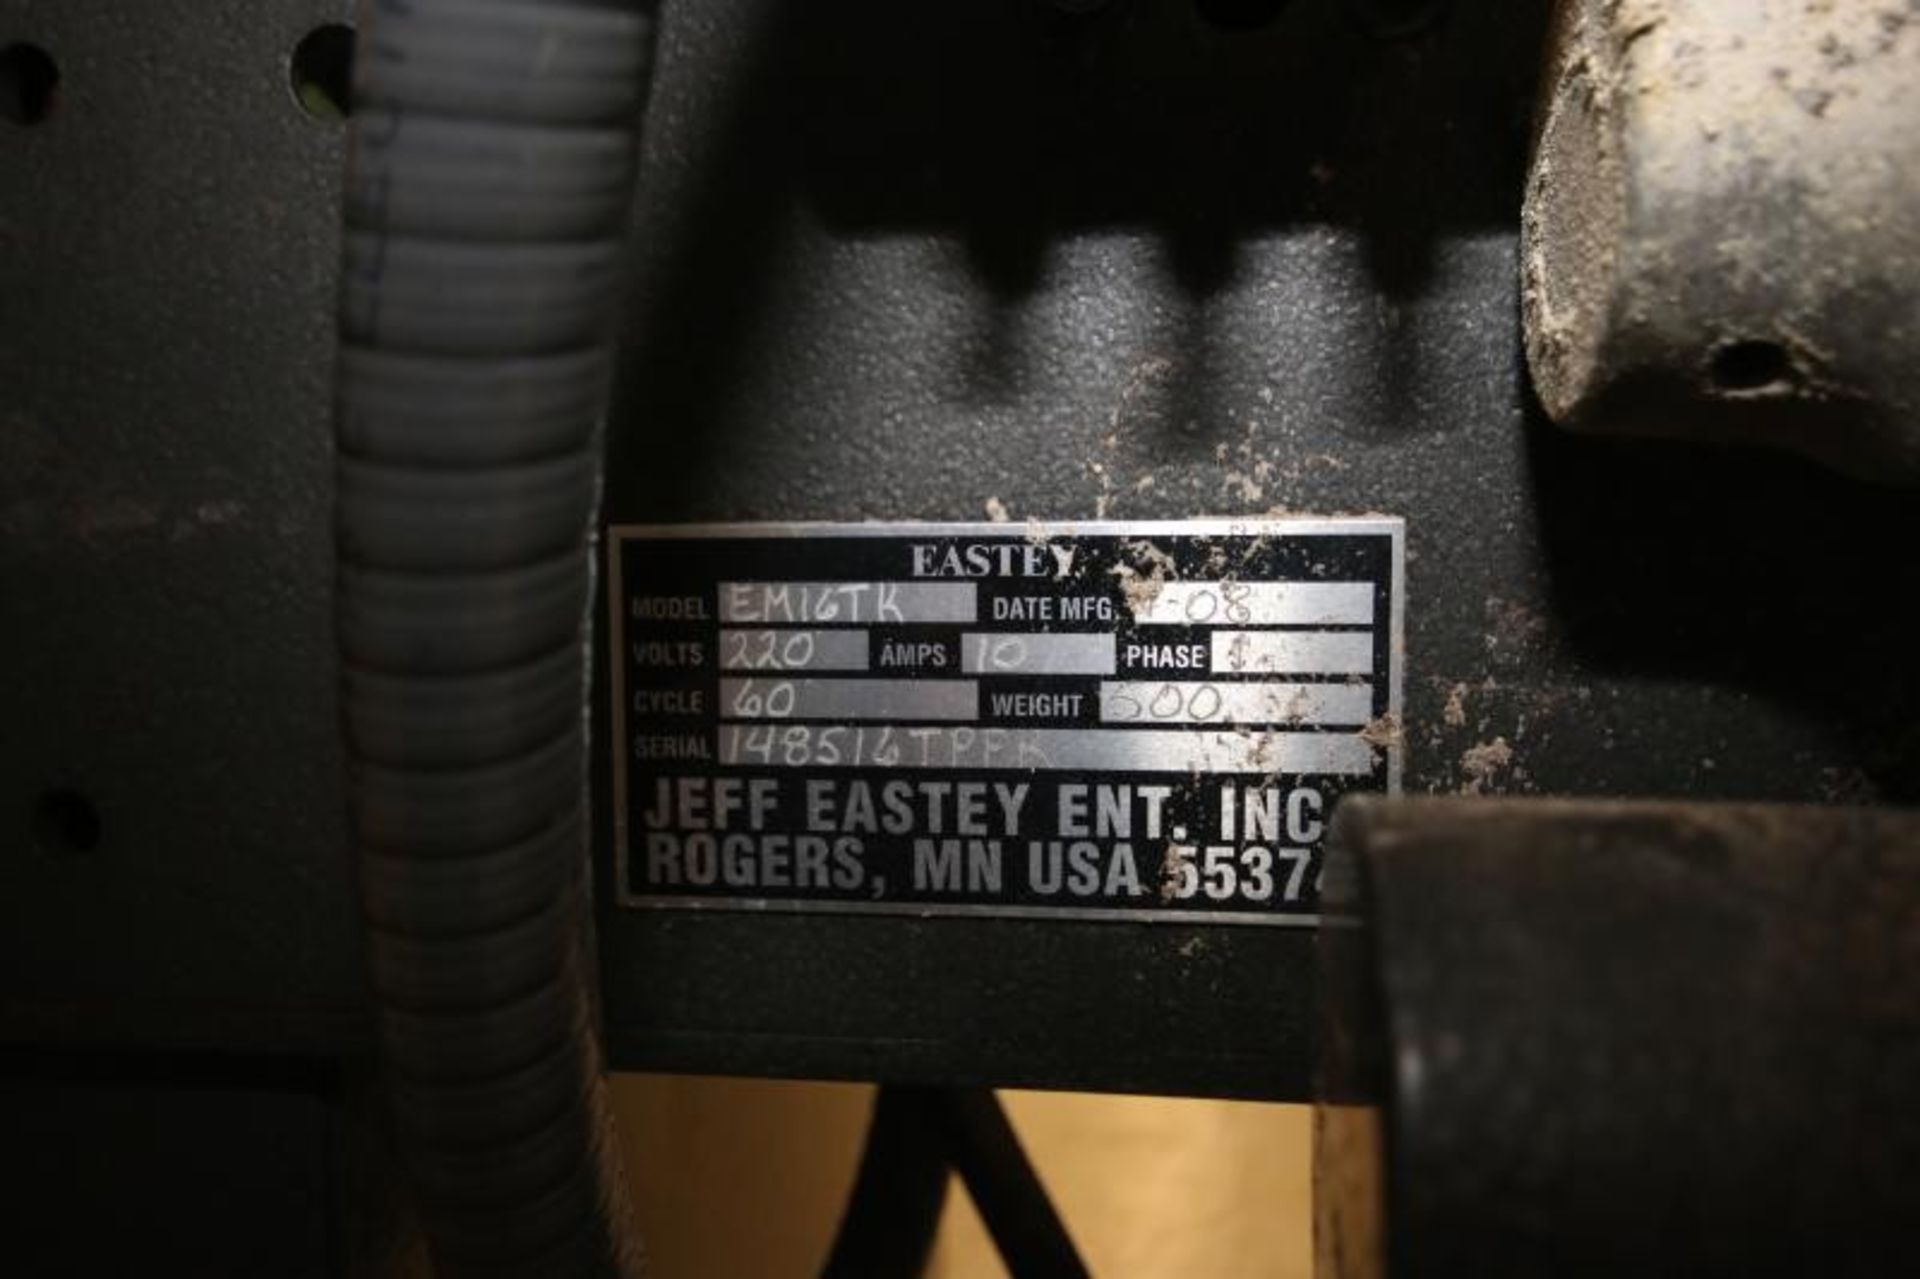 Eastley L Bar Sealer, Model EM16TK, SN 148516TPPK,16" W x 20" L Semi Automatic, 220V (INV#81409)( - Image 5 of 5